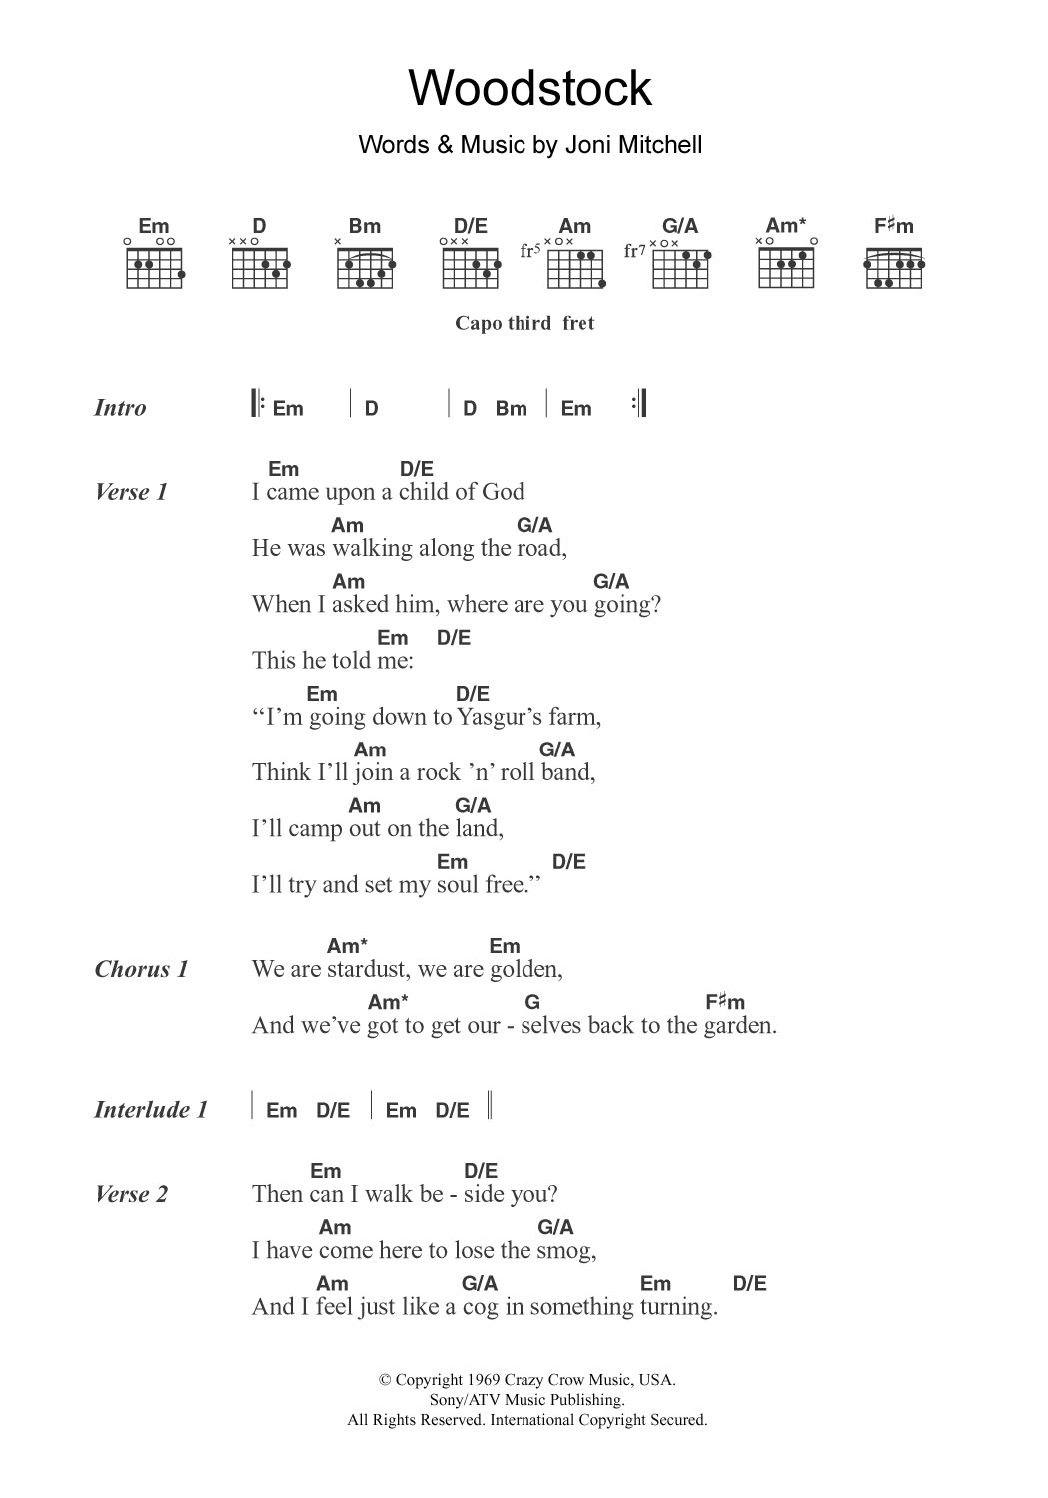 Matthews Southern Comfort Woodstock Sheet Music Notes & Chords for Guitar Chords/Lyrics - Download or Print PDF